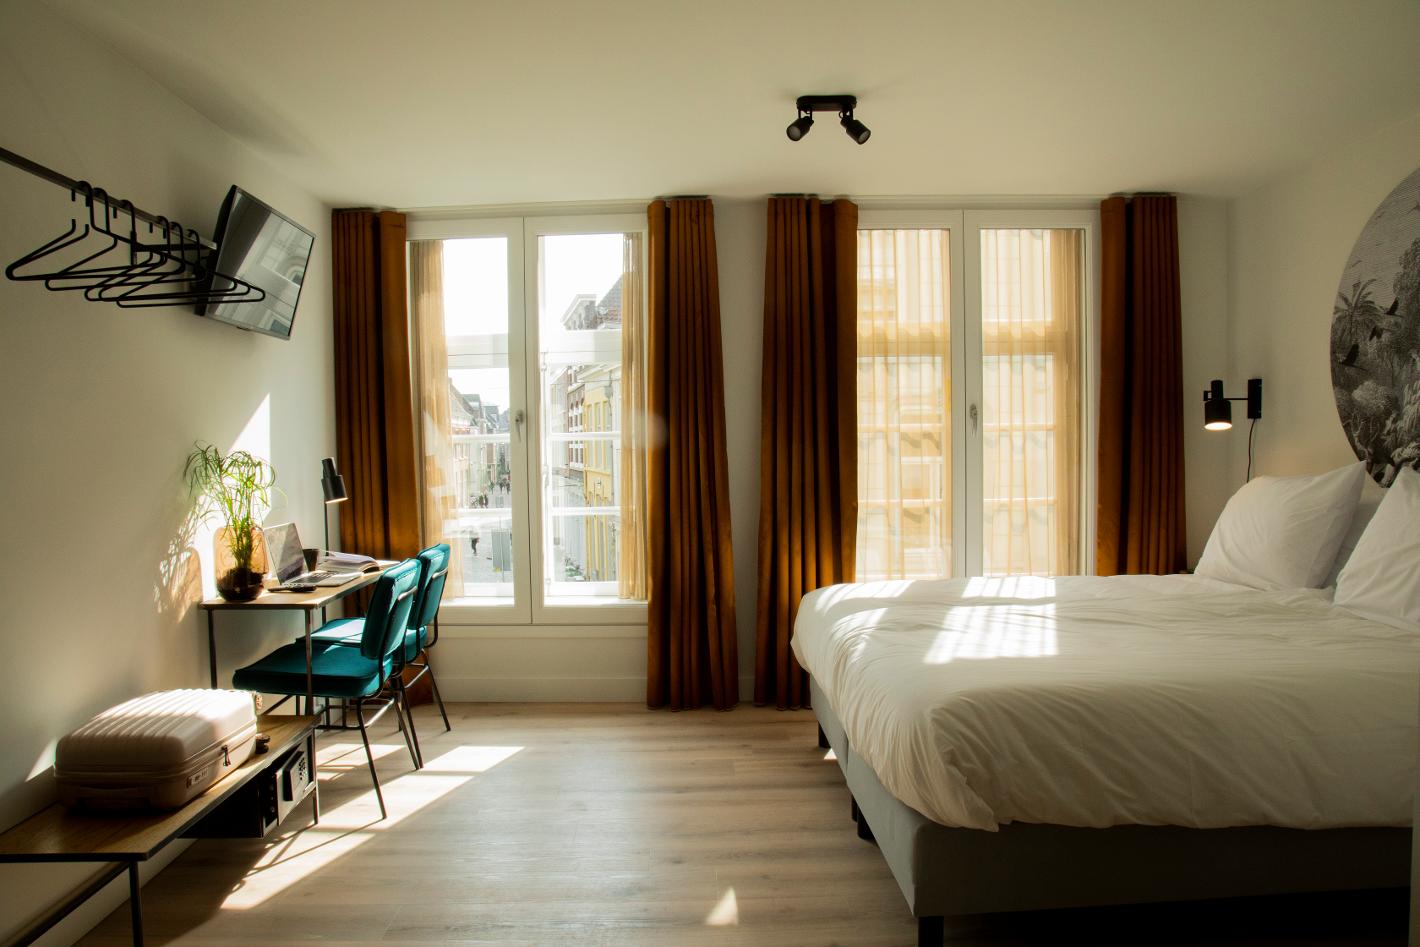 Foto Hotel Haverkist in Den Bosch, Slapen, Overnachten - #2